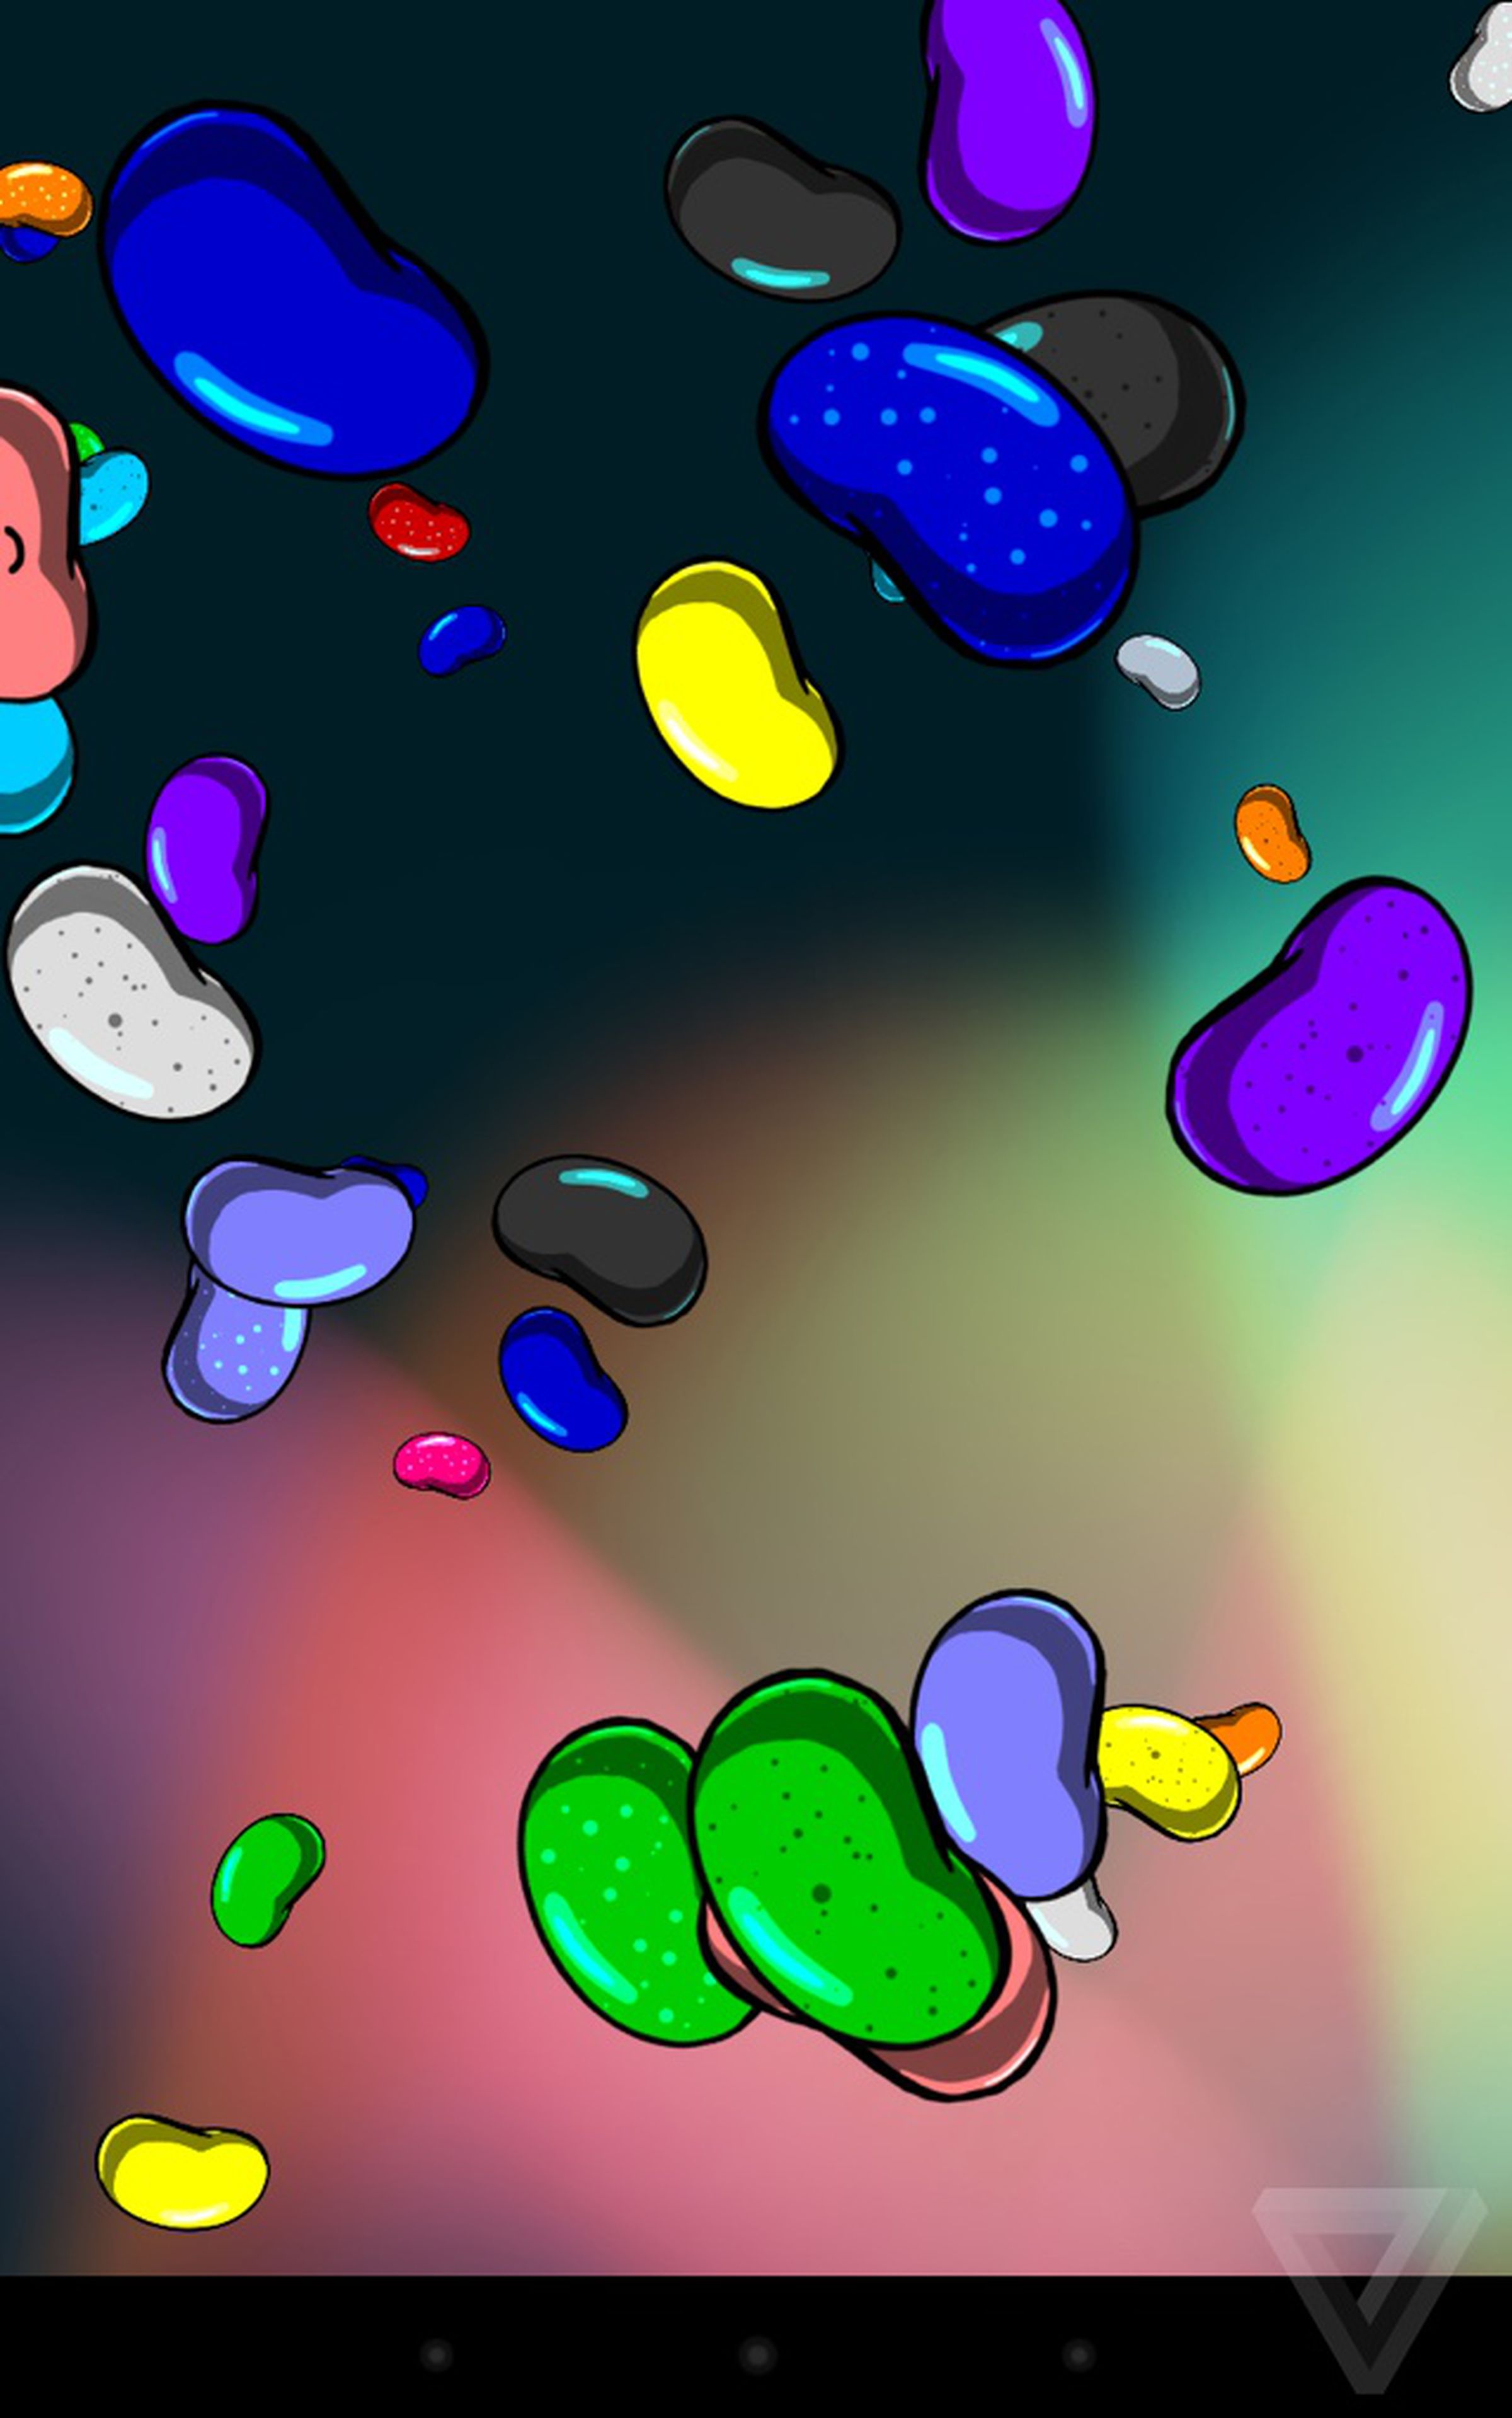 Google Nexus 7 Jelly Bean screenshots